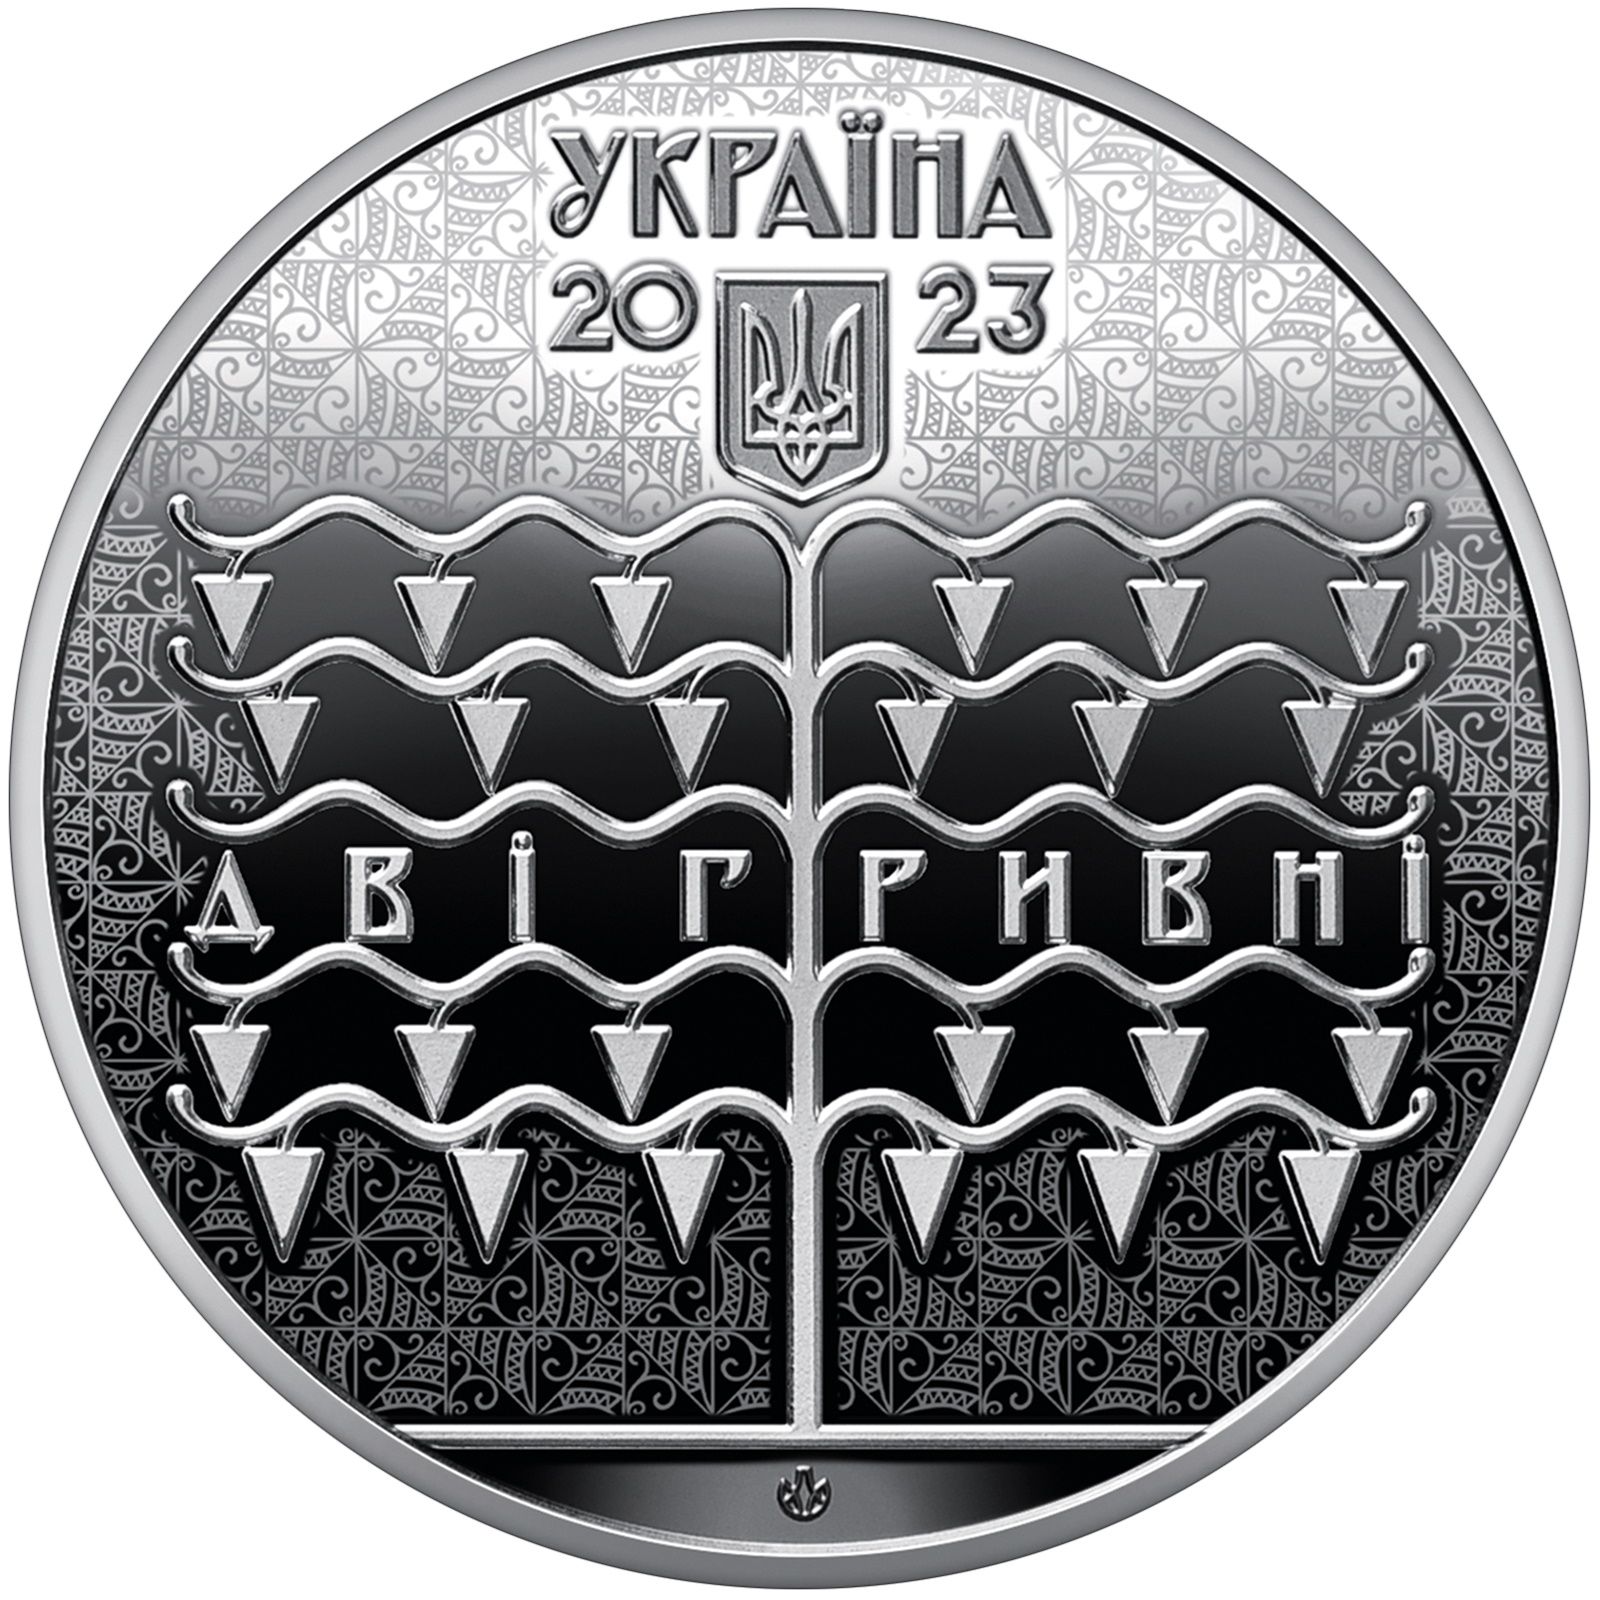 UA 2 Hryvnias 2023 National Bank of Ukraine logo